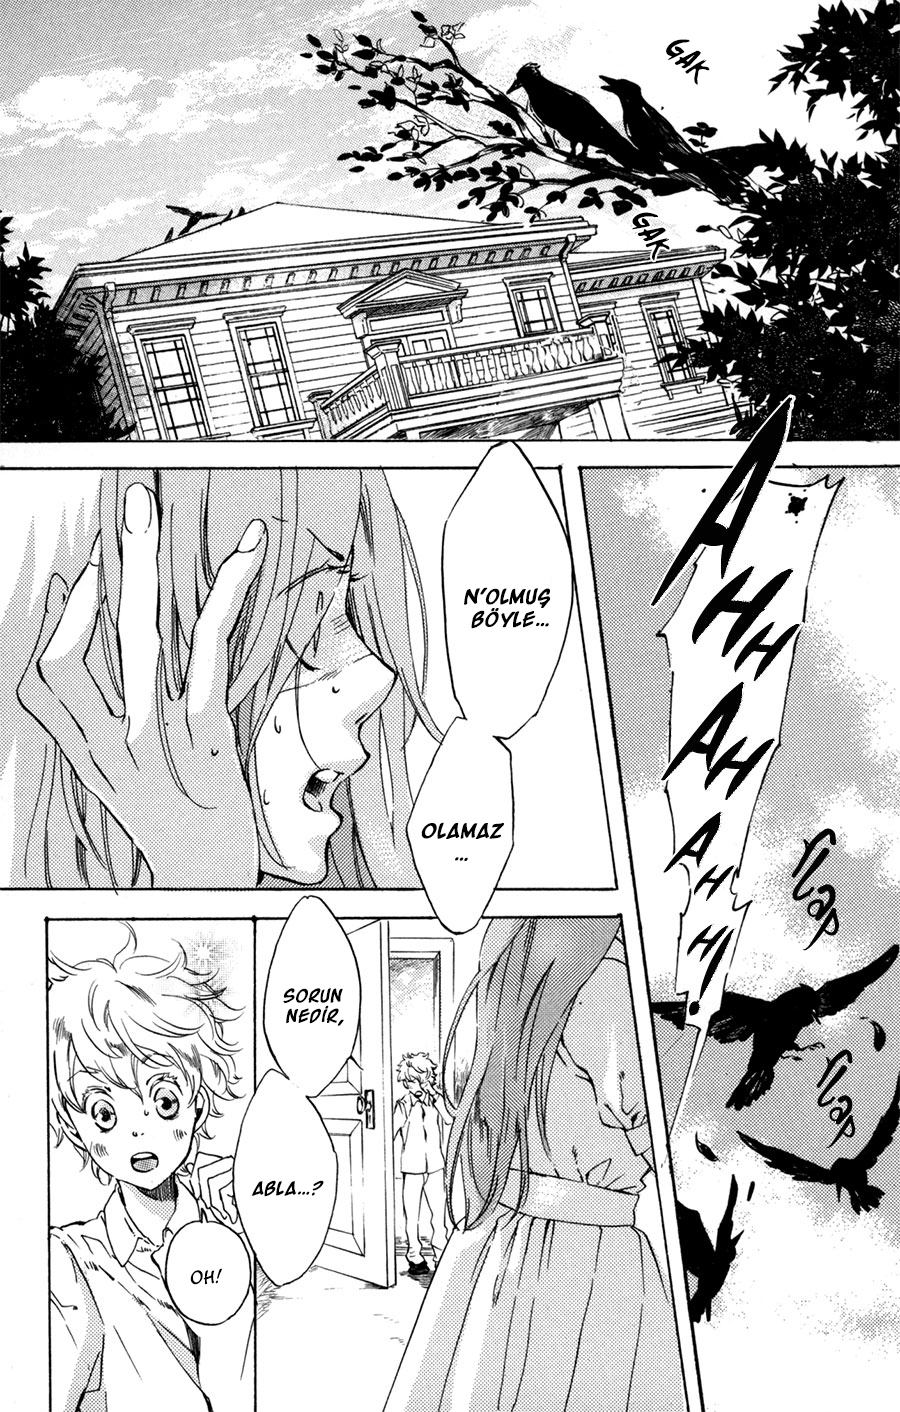 Merikuron no Namida: Chapter 02 - Page 3